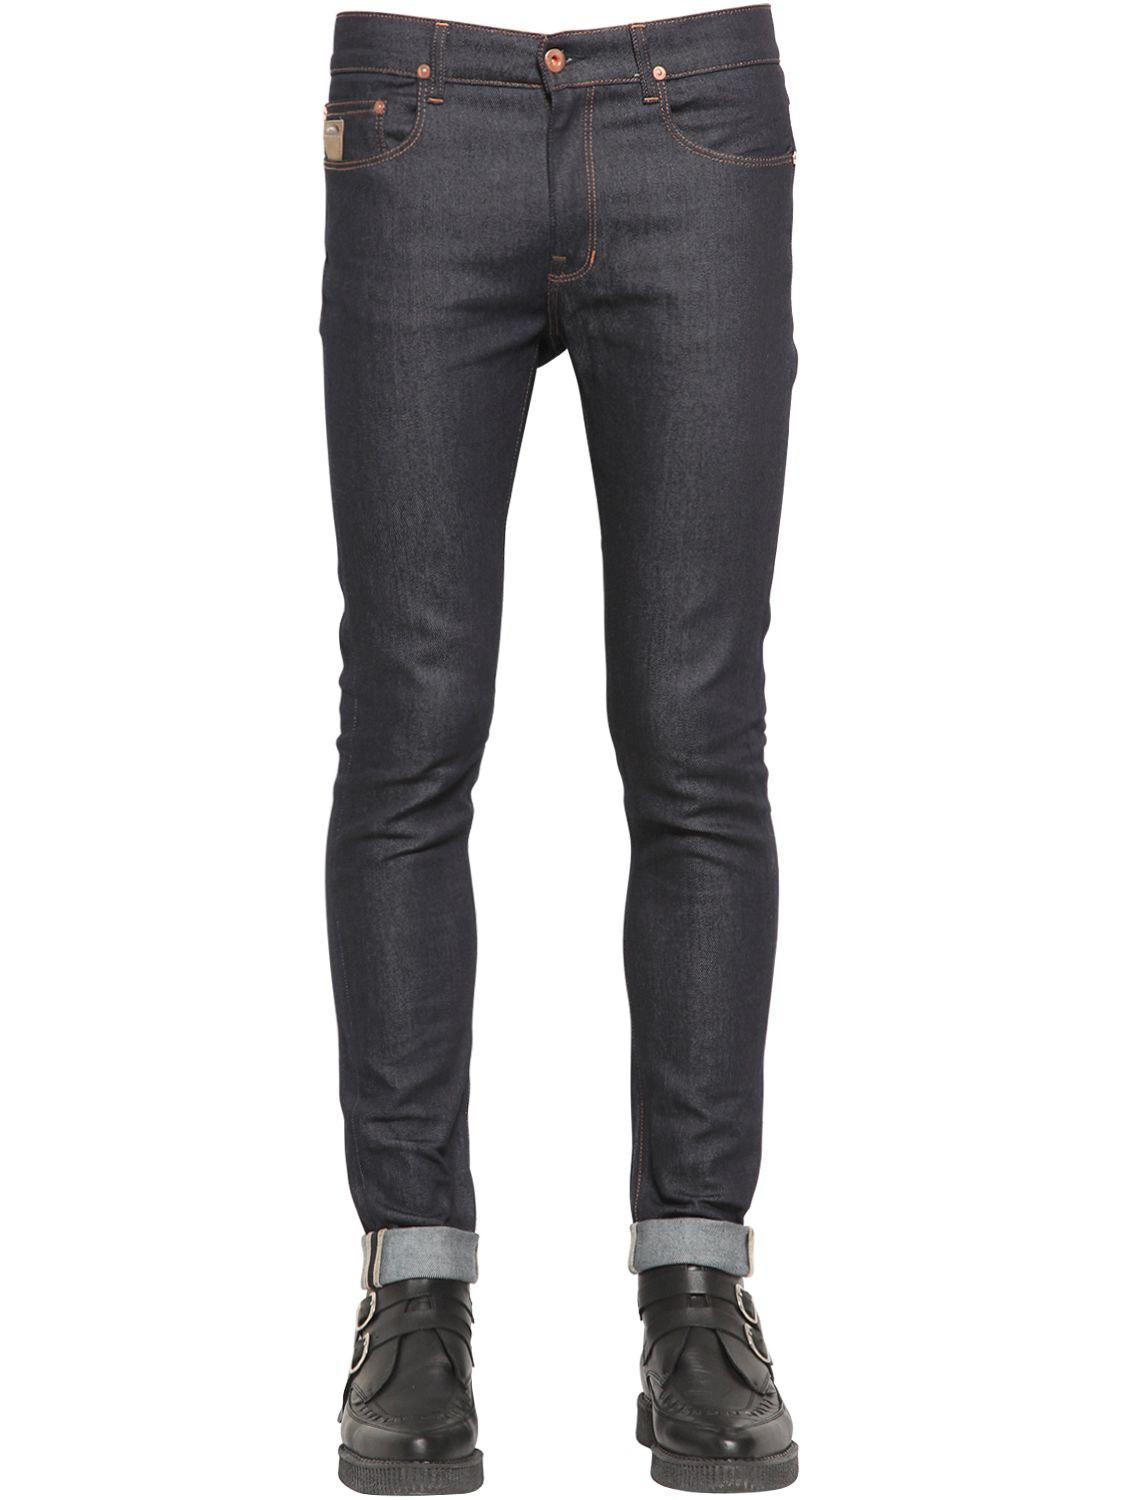 April77 16cm Joey New Overdrive Denim Jeans in Blue for Men - Lyst